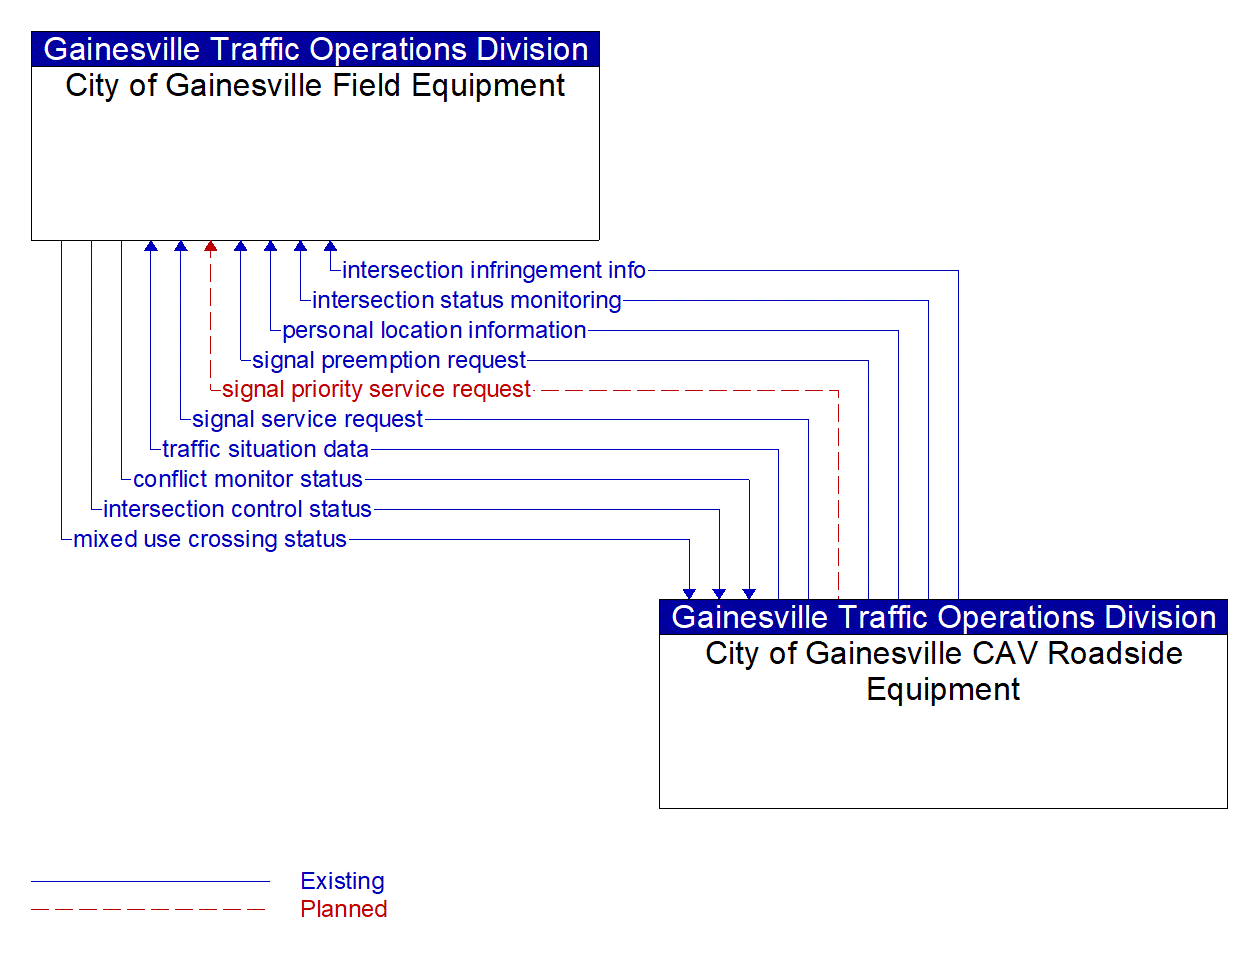 Architecture Flow Diagram: City of Gainesville CAV Roadside Equipment <--> City of Gainesville Field Equipment